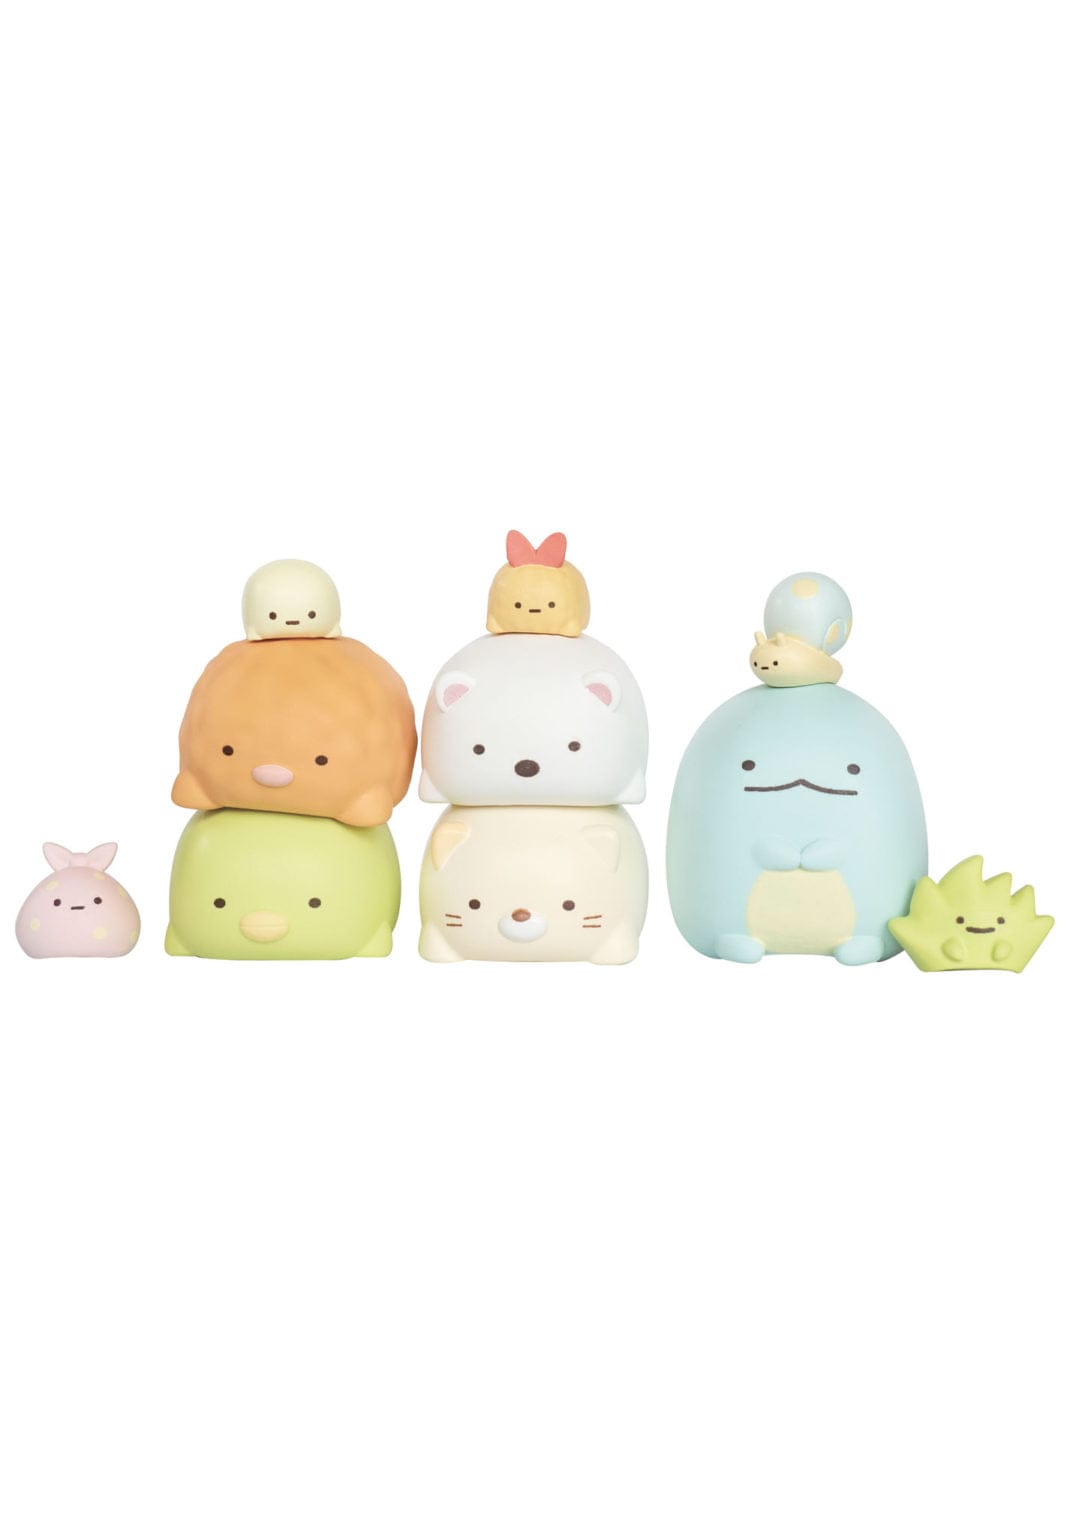 Clever Idiots Sumikko Gurashi Stackable Figurines Surprise Box Kawaii Gifts 858421006725